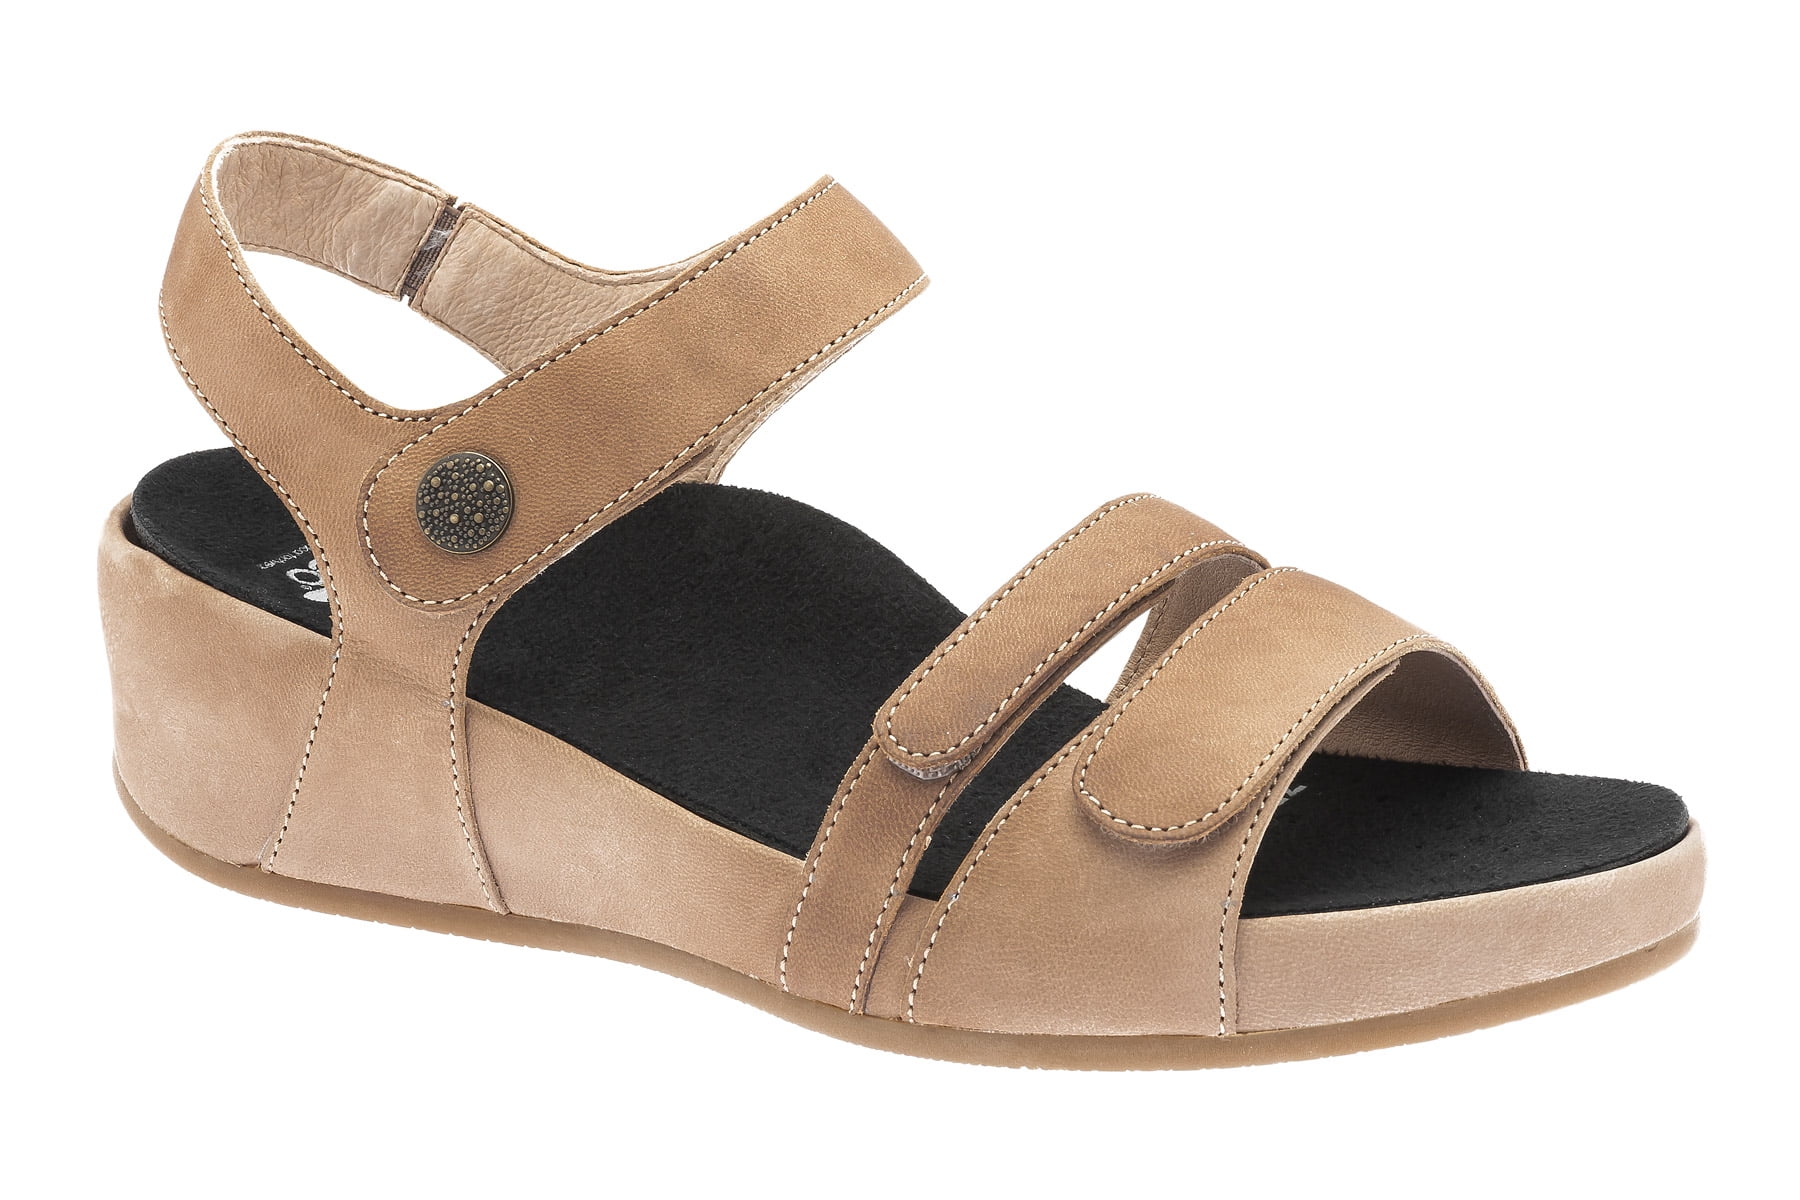 ABEO Footwear - ABEO Gabrielle - Wedge Sandals in Brown - Walmart.com ...